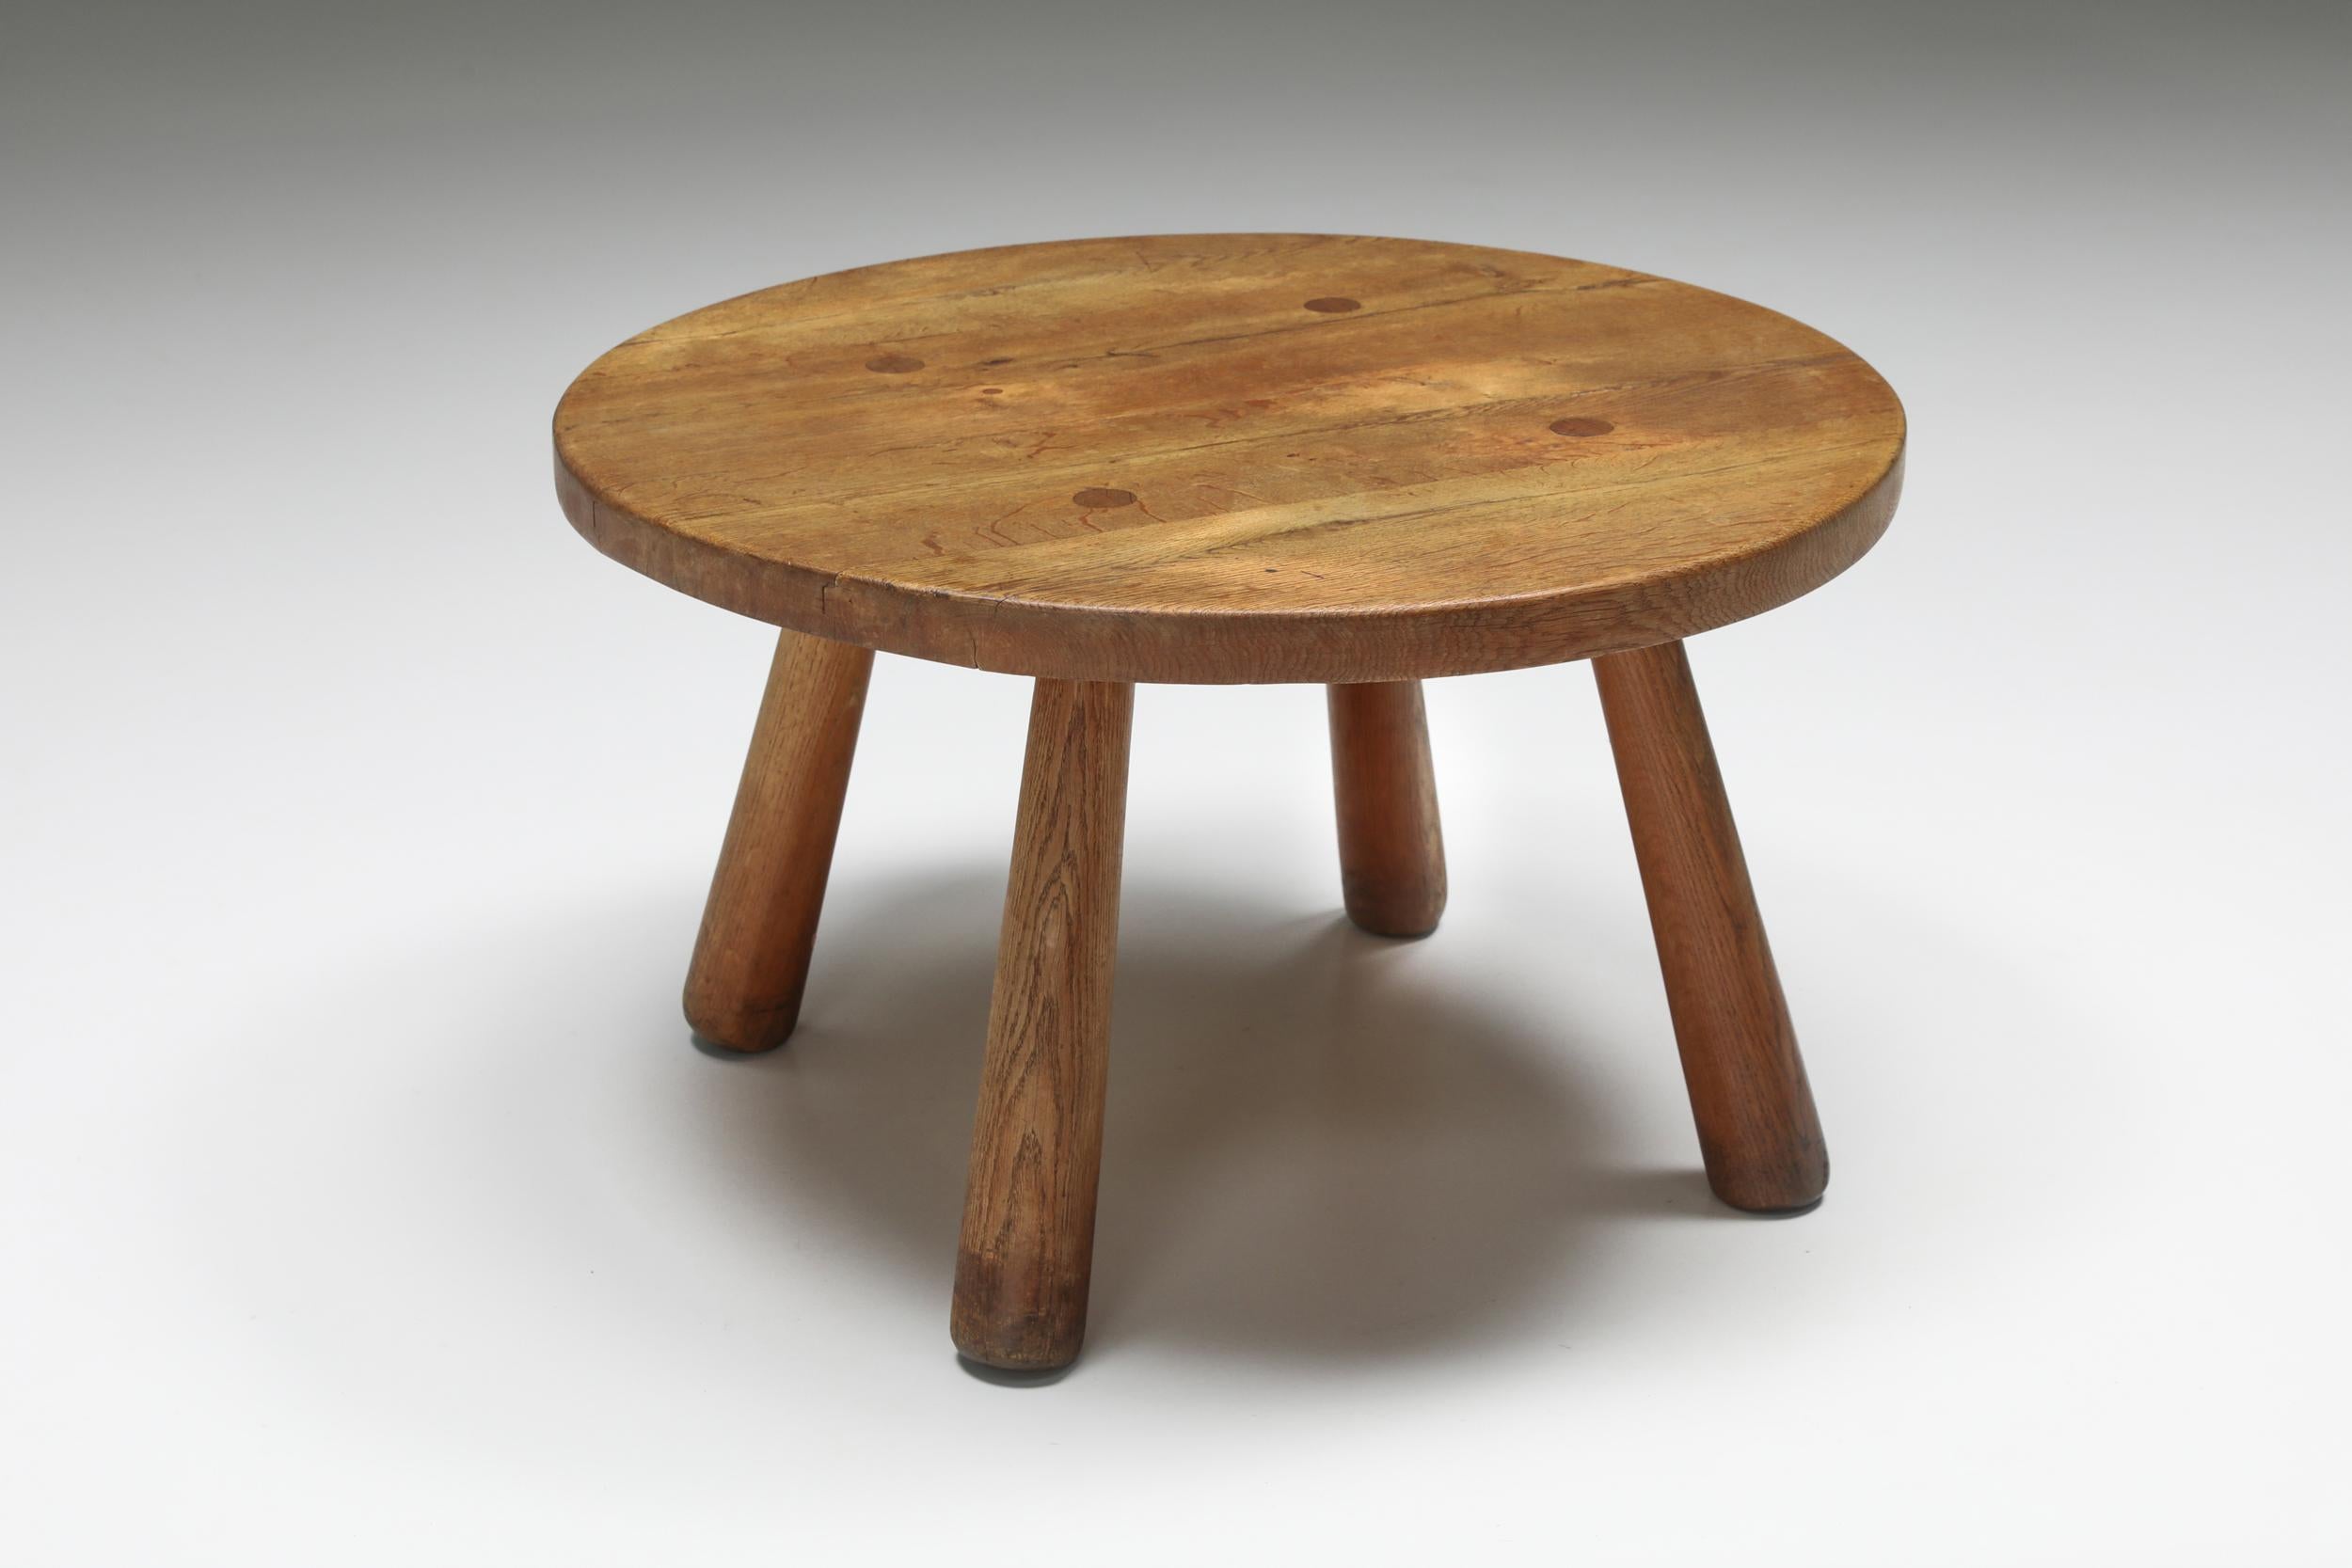 Mid-20th Century Rustic Round Coffee Table, Mid-Century Modern, Minimalist, 1950's